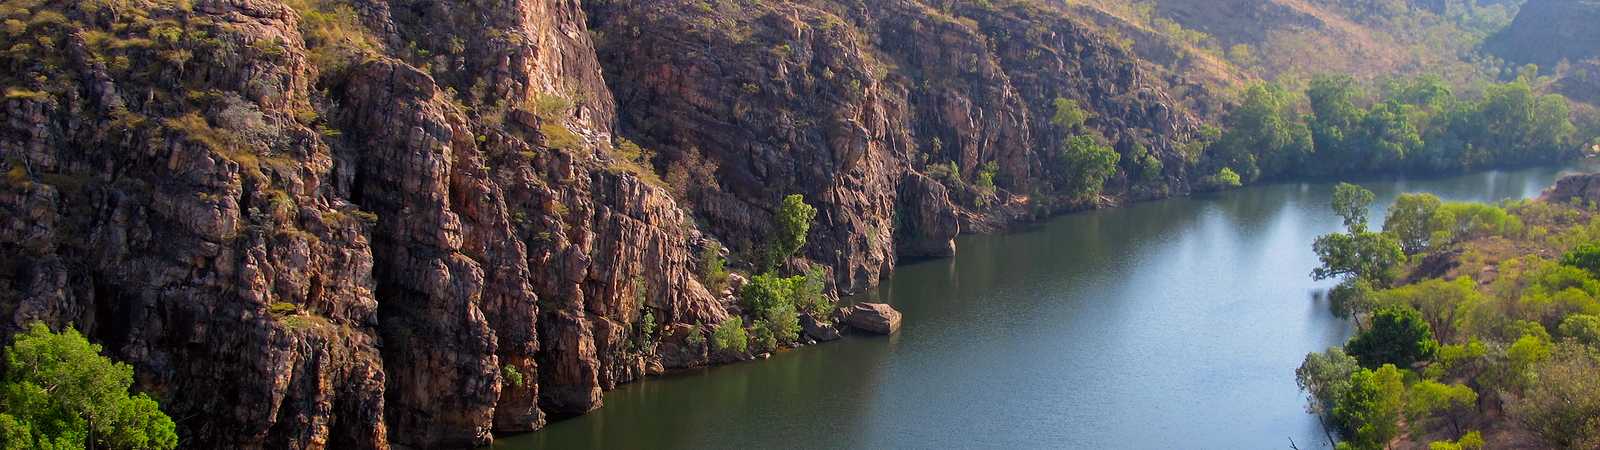 Katherine gorge in the northern territory australia